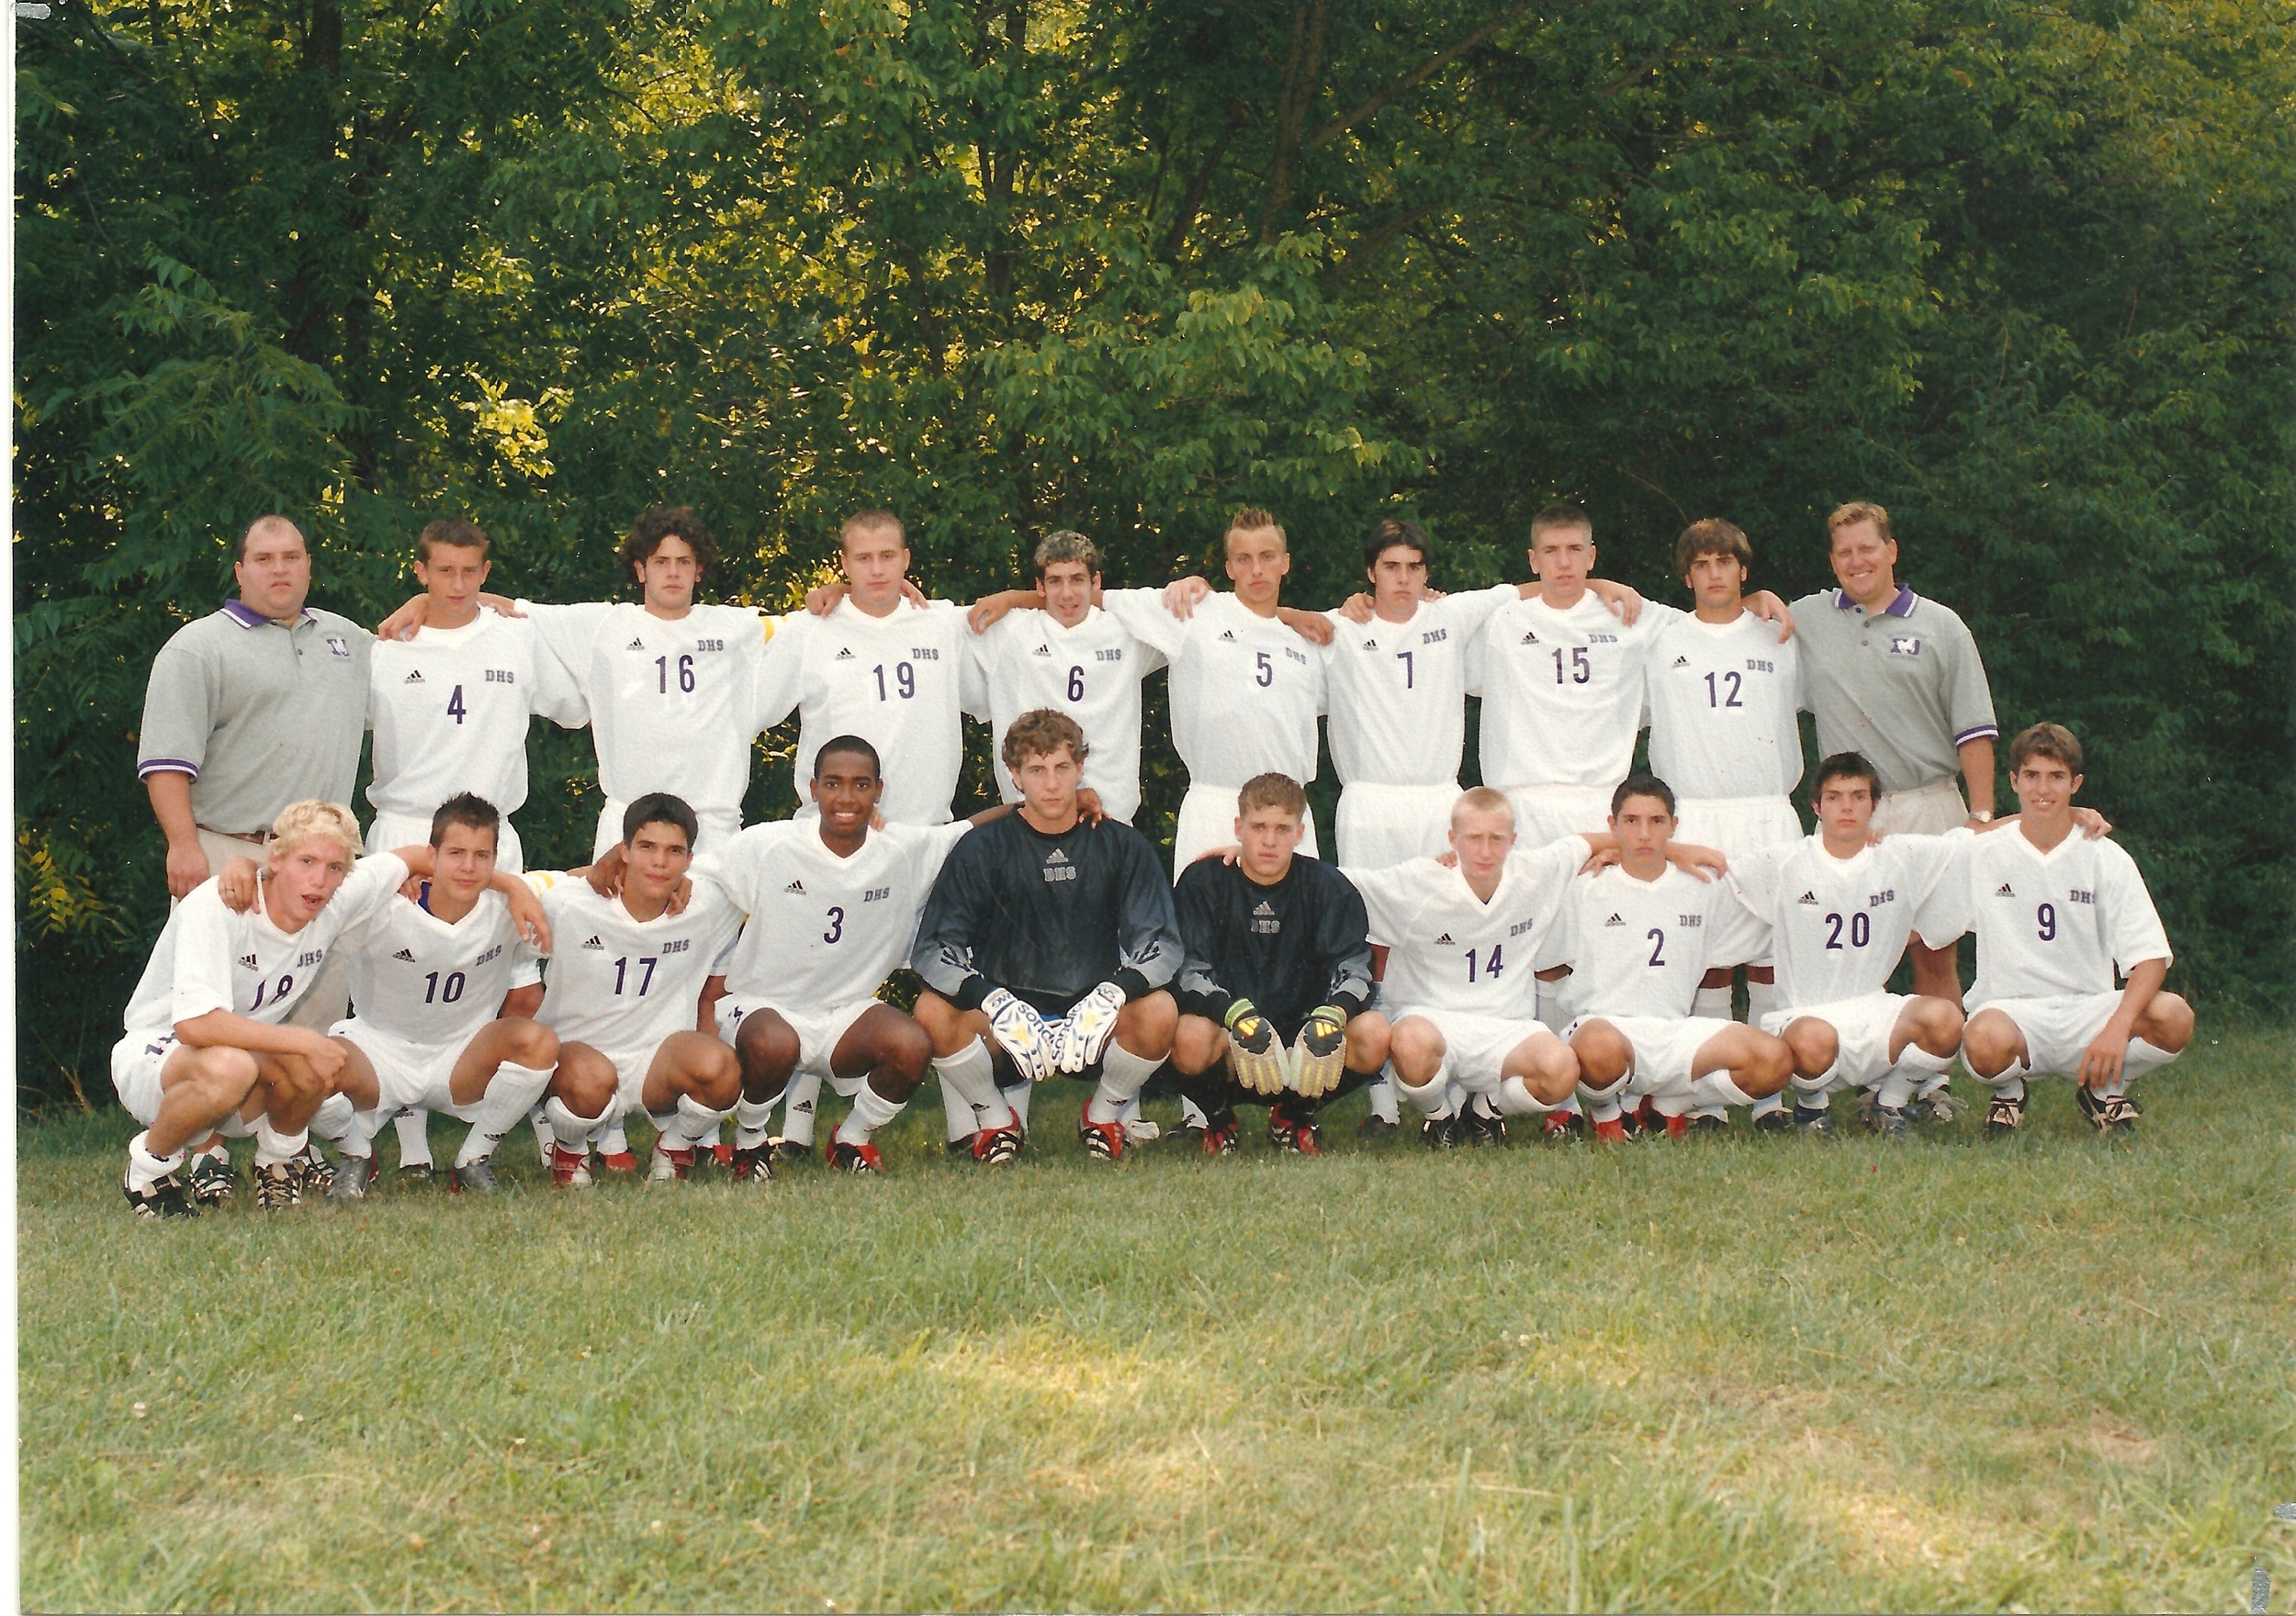   2002 Boys Soccer  